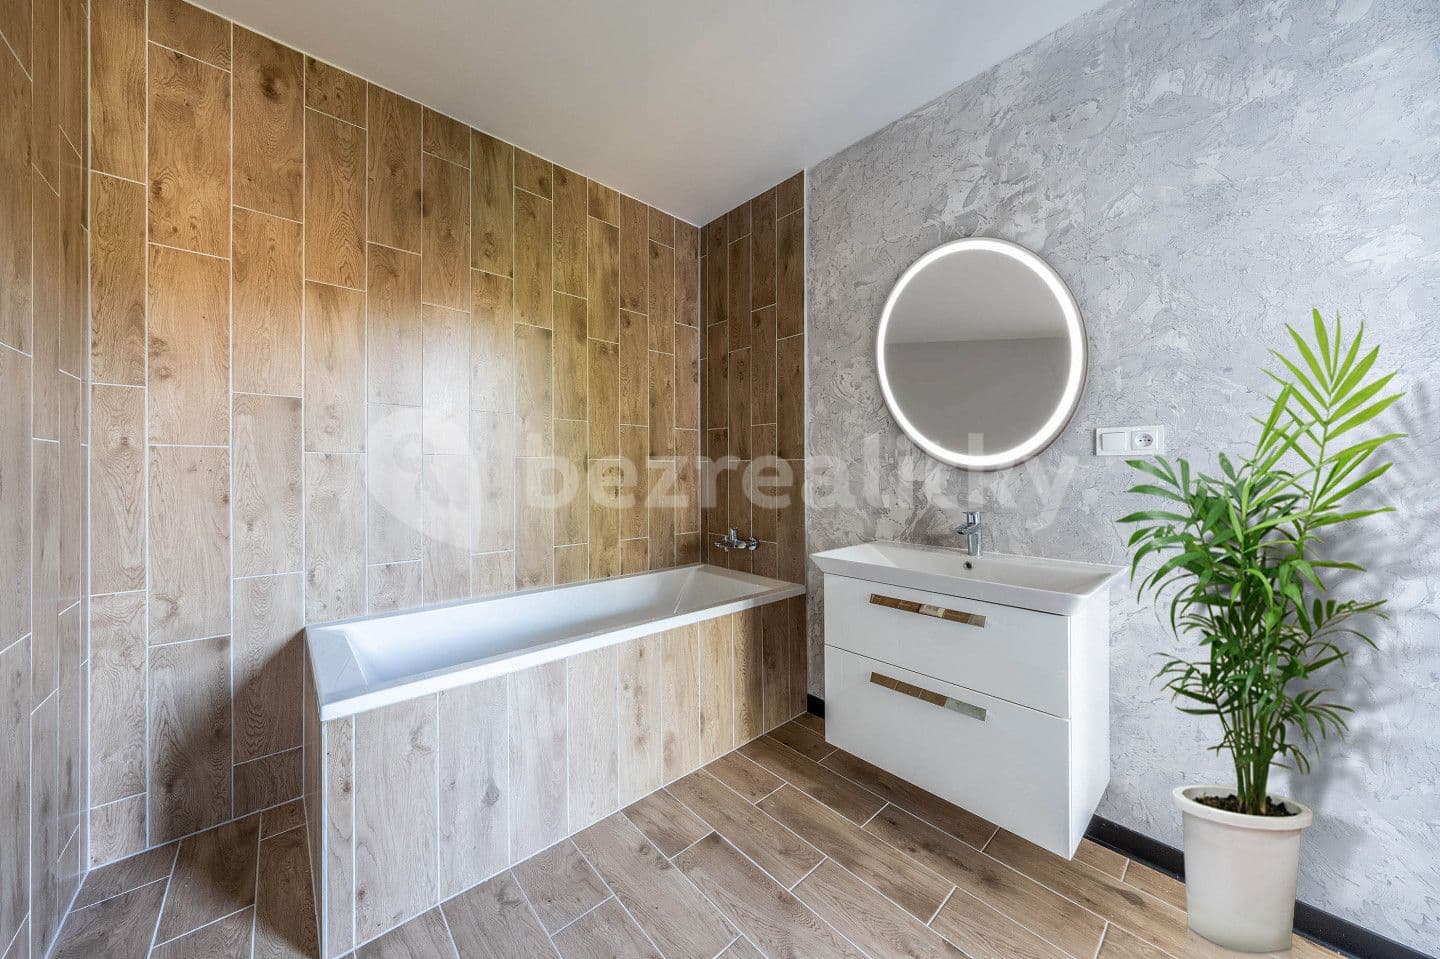 Predaj bytu 3-izbový 83 m², Raisova, Jablonec nad Nisou, Liberecký kraj